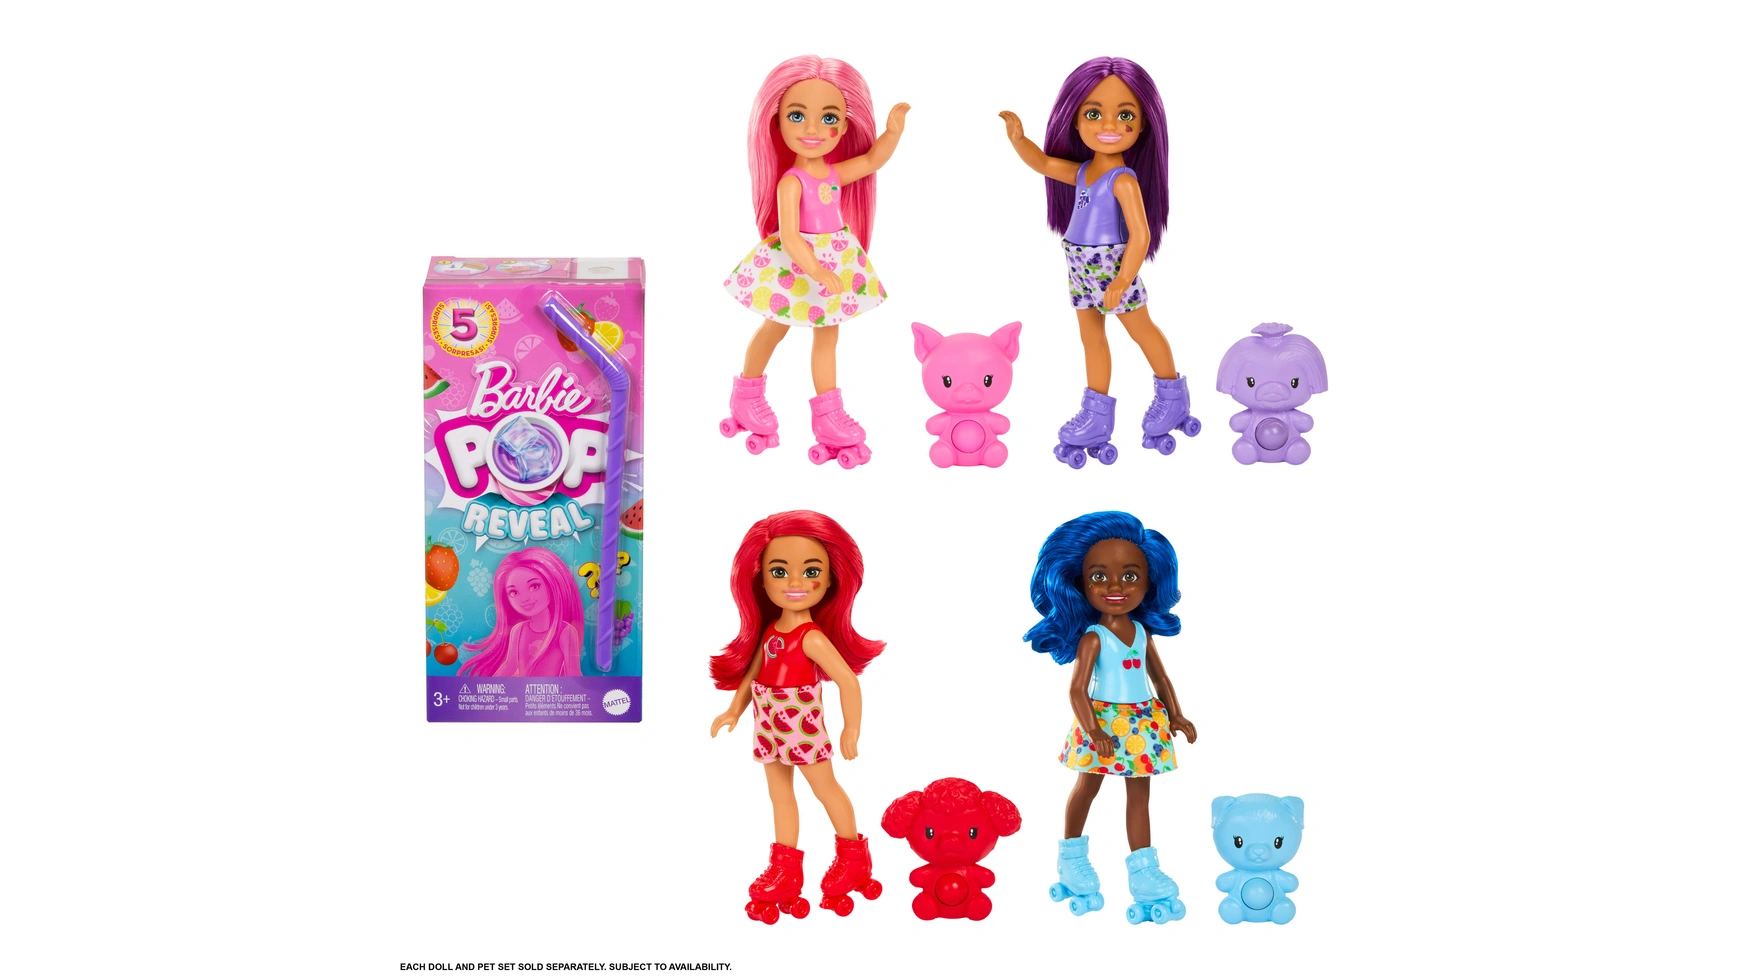 Barbie Поп! Reveal Chelsea Fruit Series, 1 штука, в ассортименте